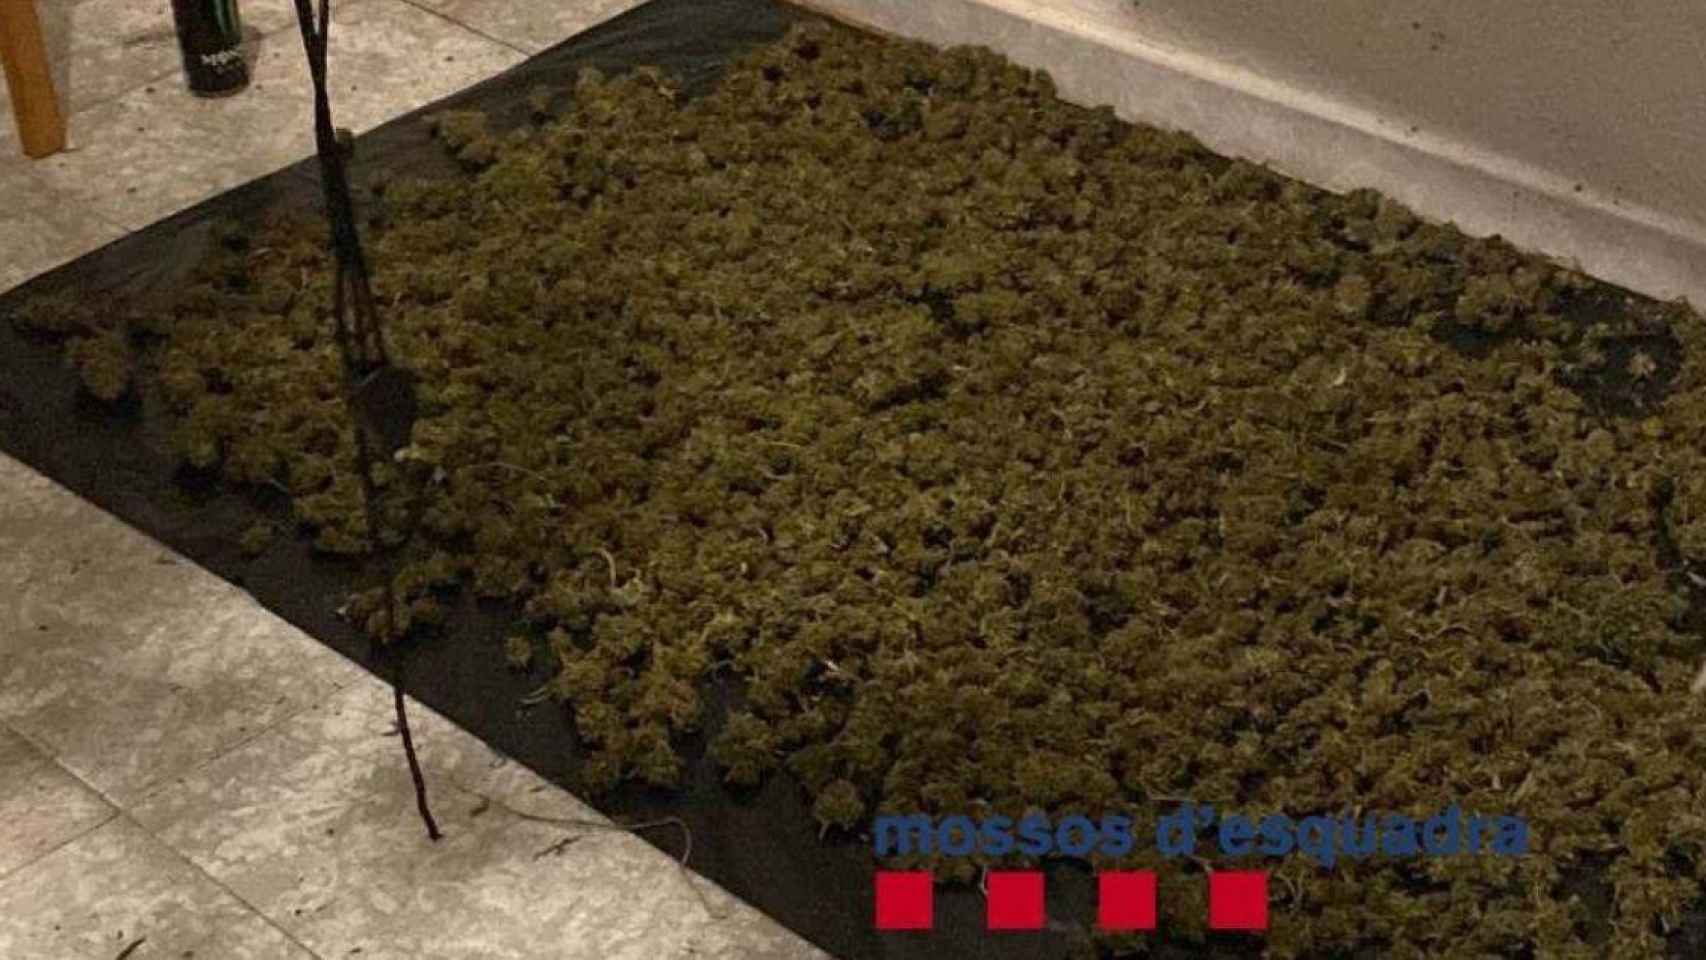 Plantación de marihuana localizada en un piso ocupado en Santa Coloma de Gramenet (Barcelona) / MOSSOS